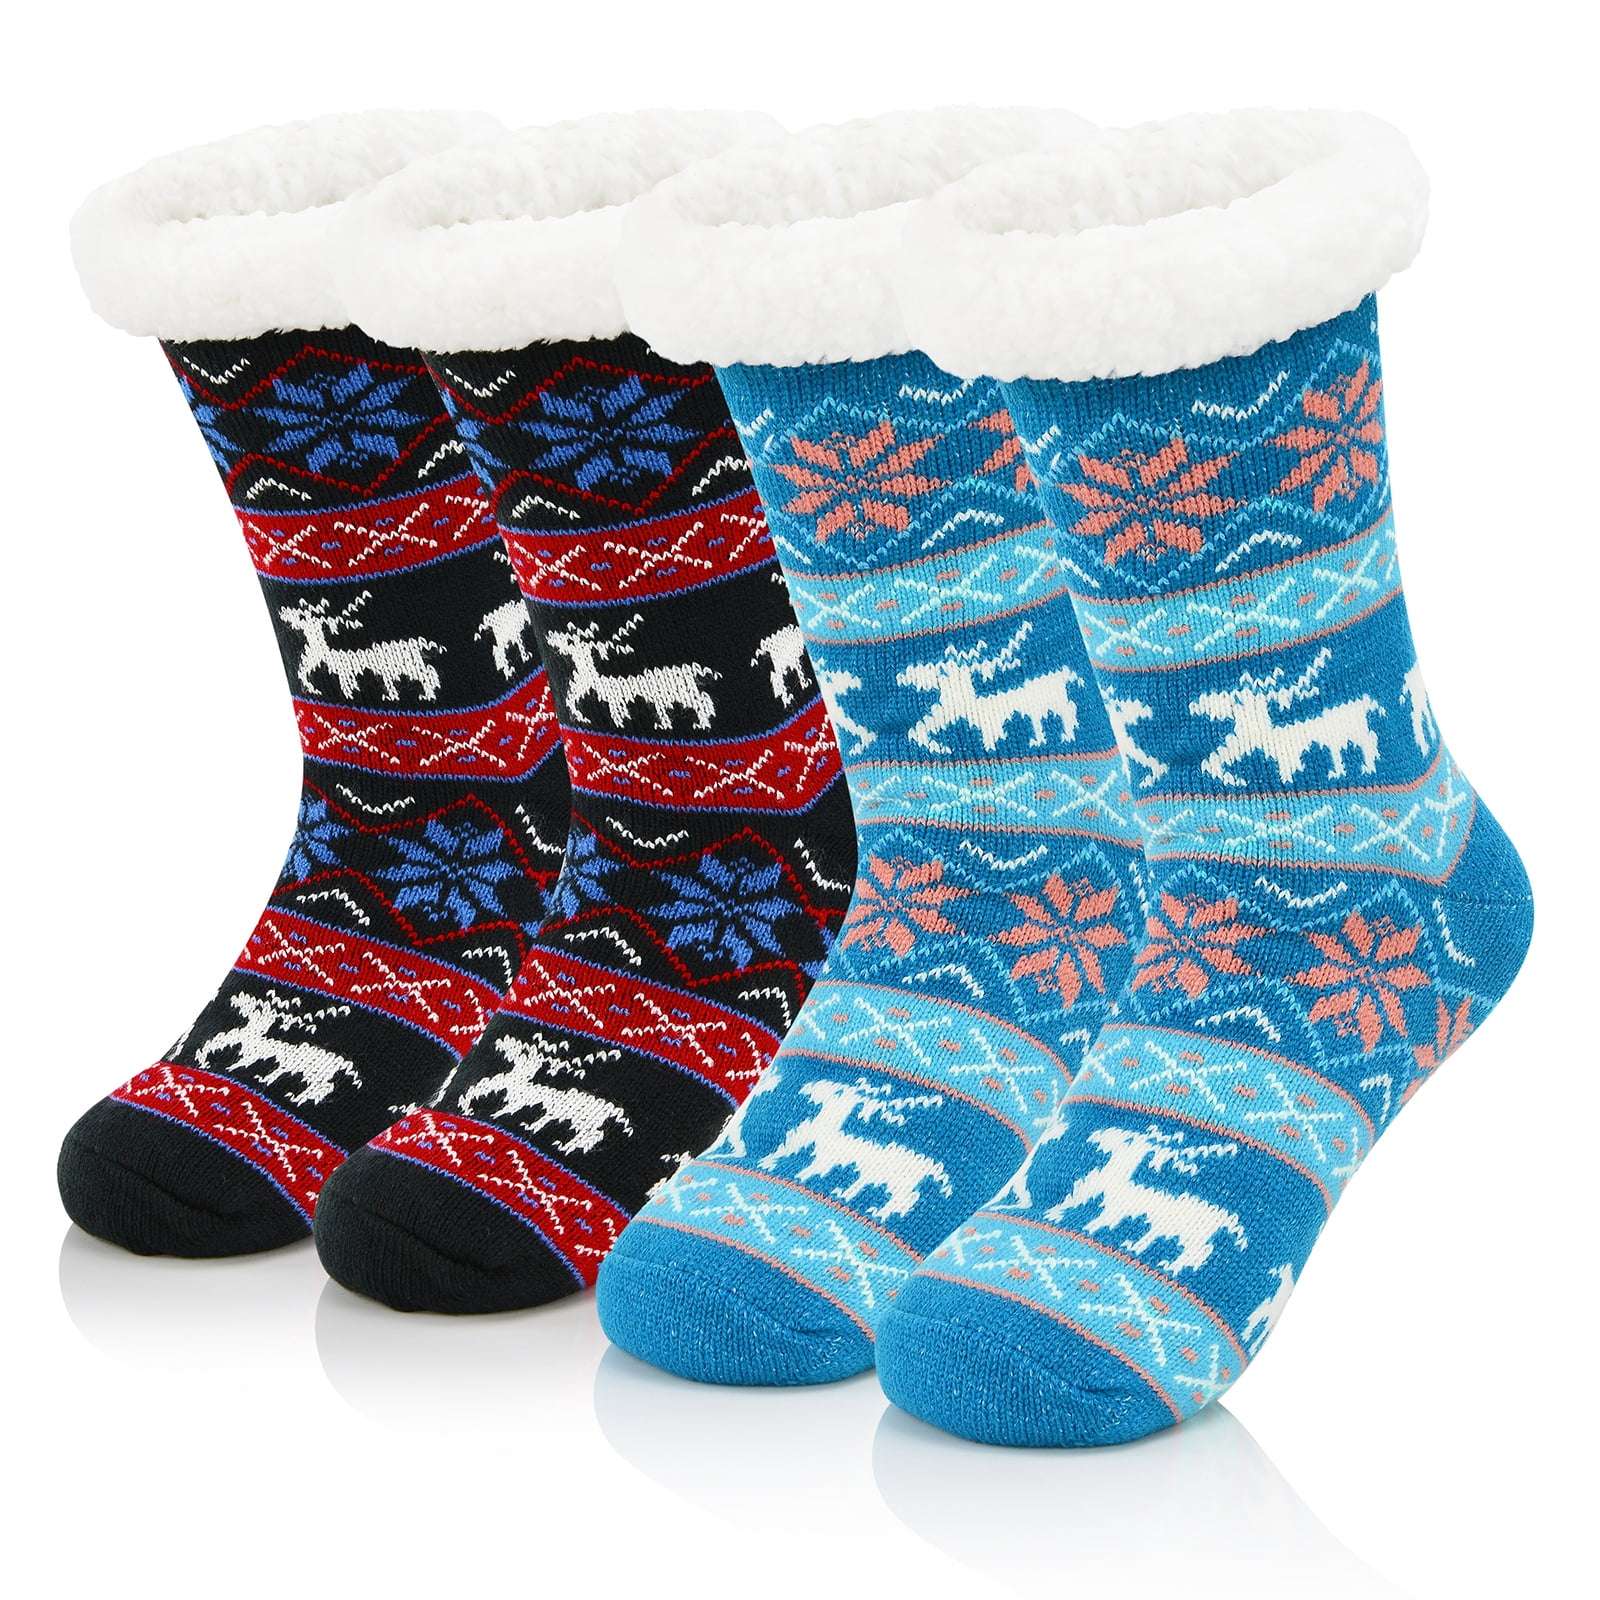 American Trends Fuzzy Socks with Grips for Women Warm House Socks